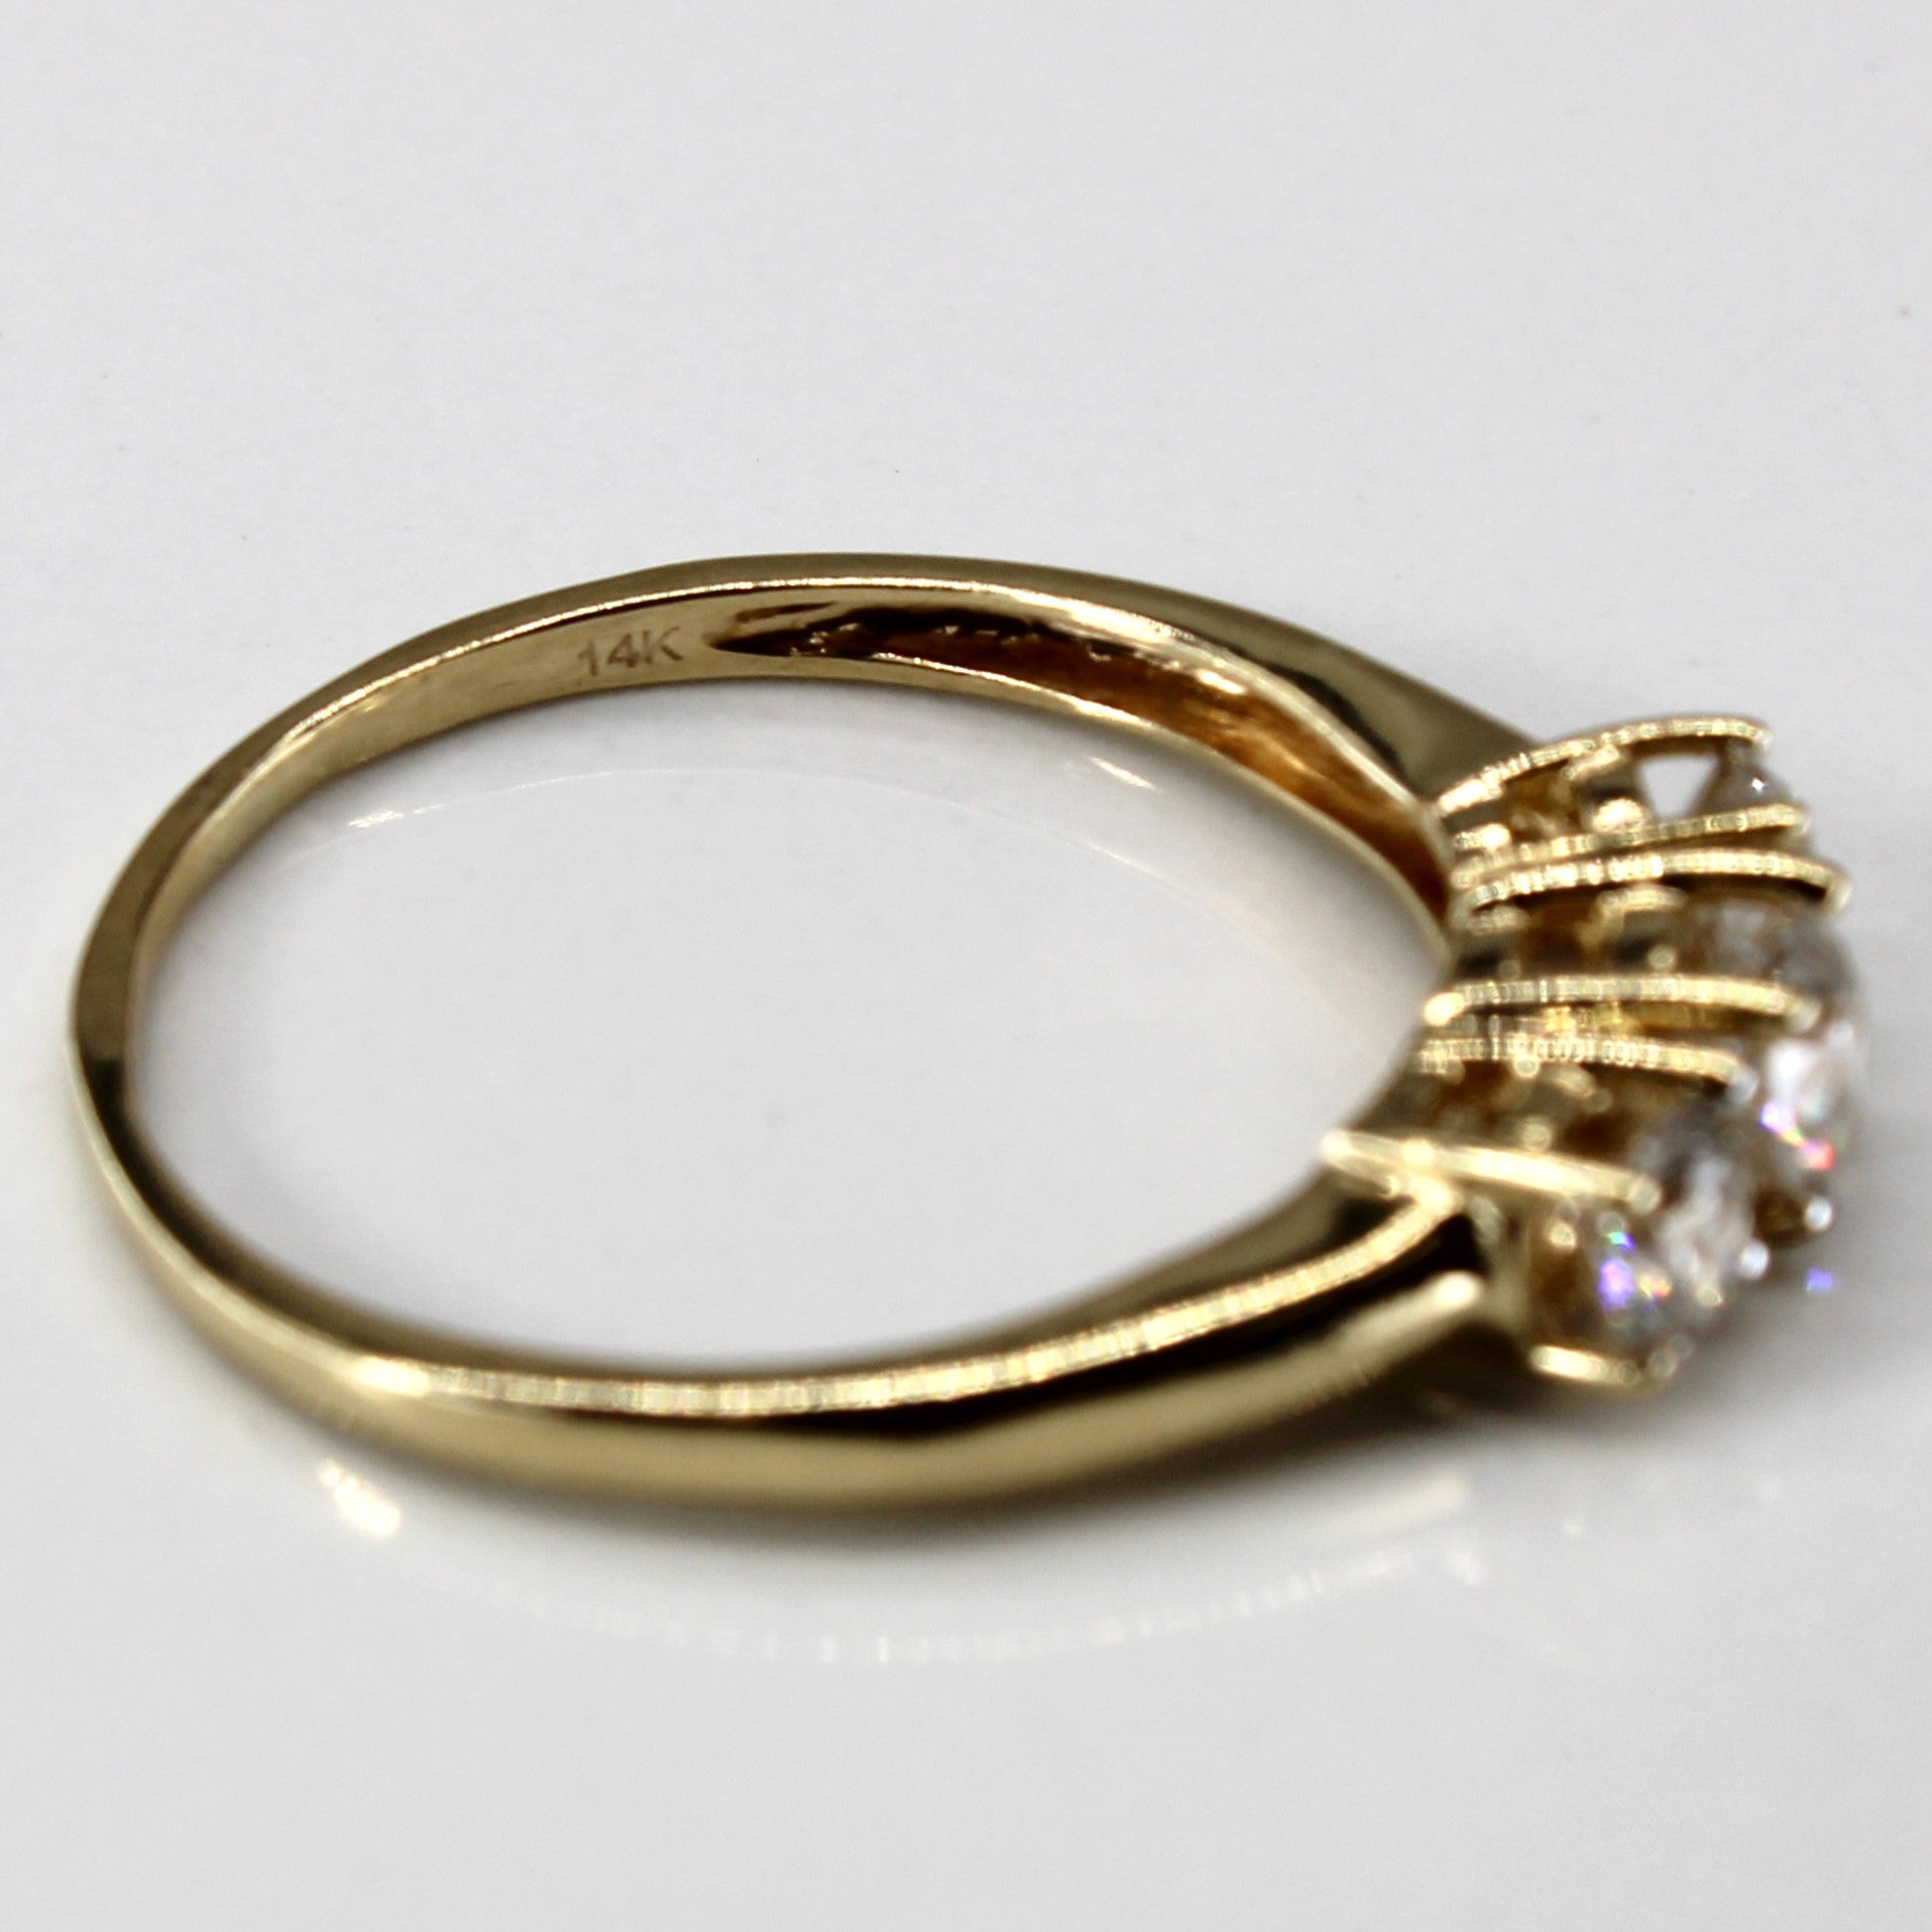 Three Stone Diamond Engagement Ring | 0.85ctw | SZ 10 |